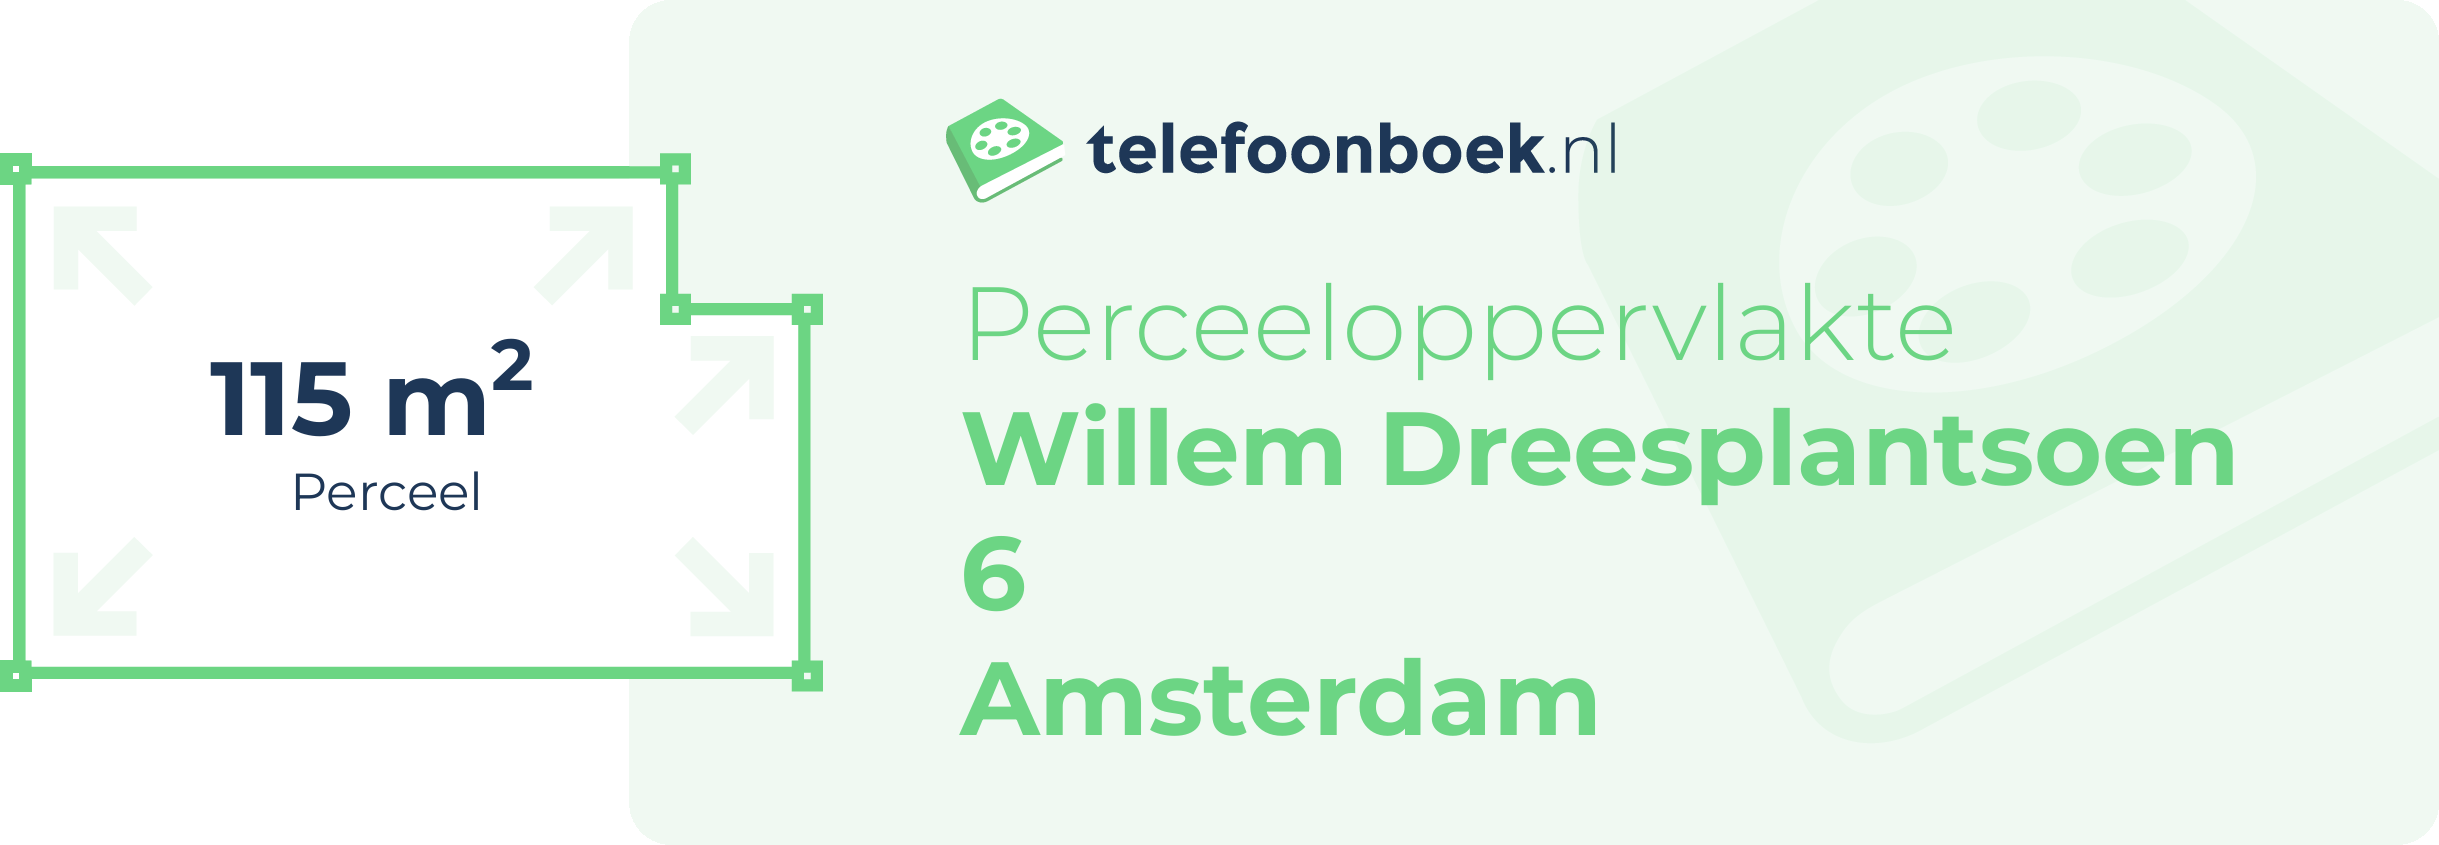 Perceeloppervlakte Willem Dreesplantsoen 6 Amsterdam